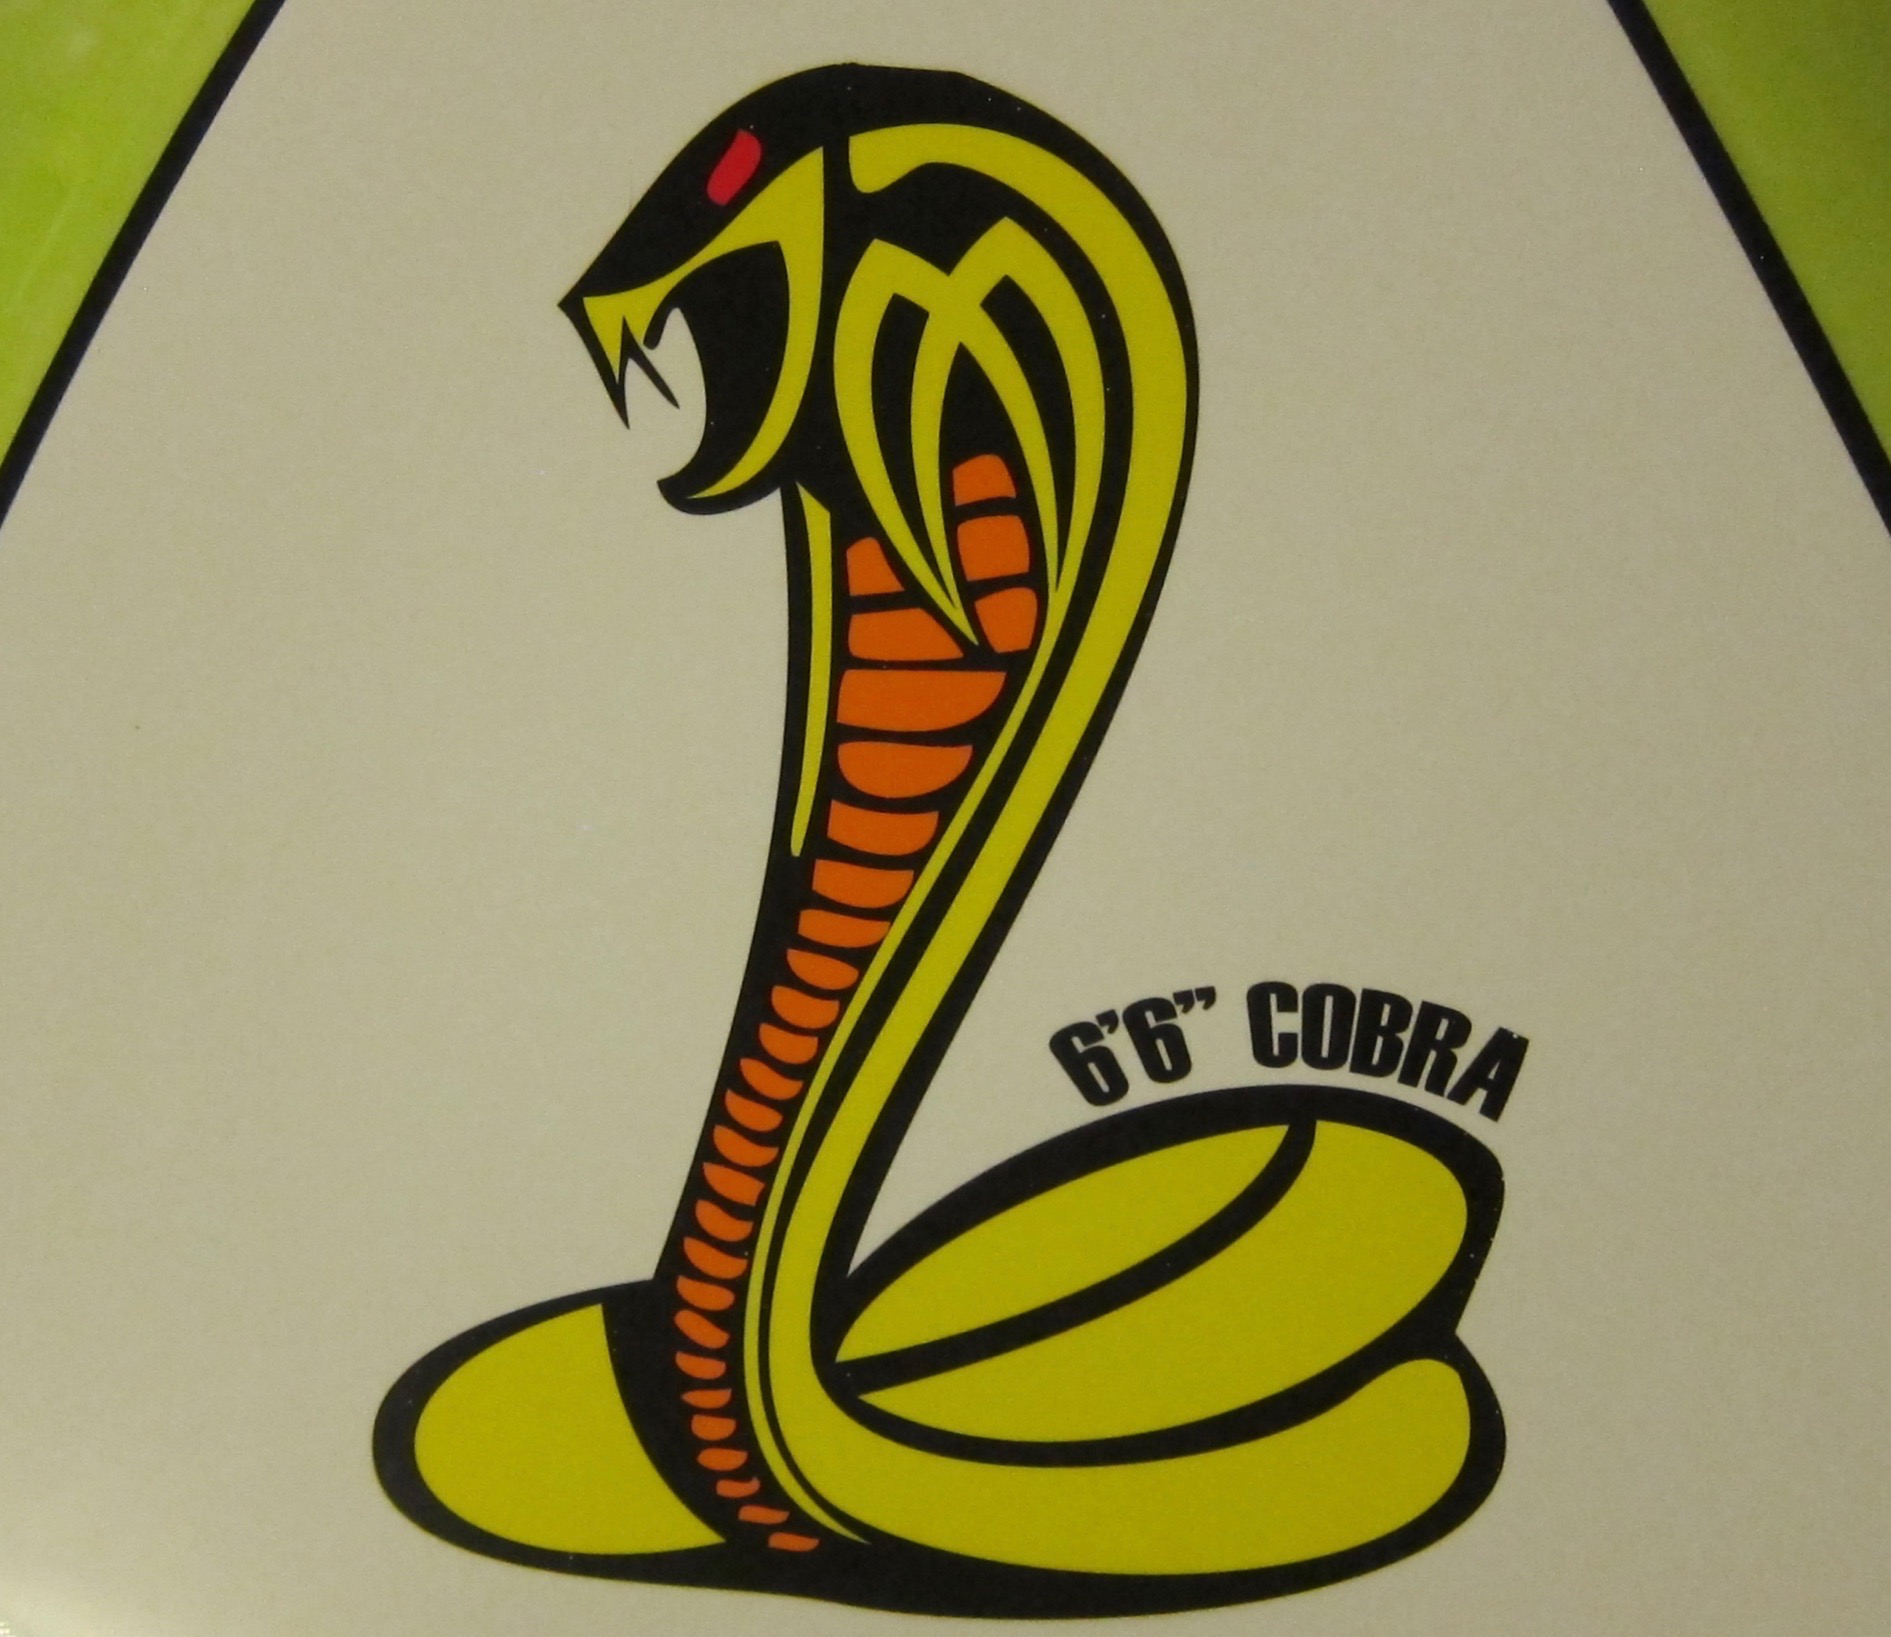 Badfish Cobra SUP